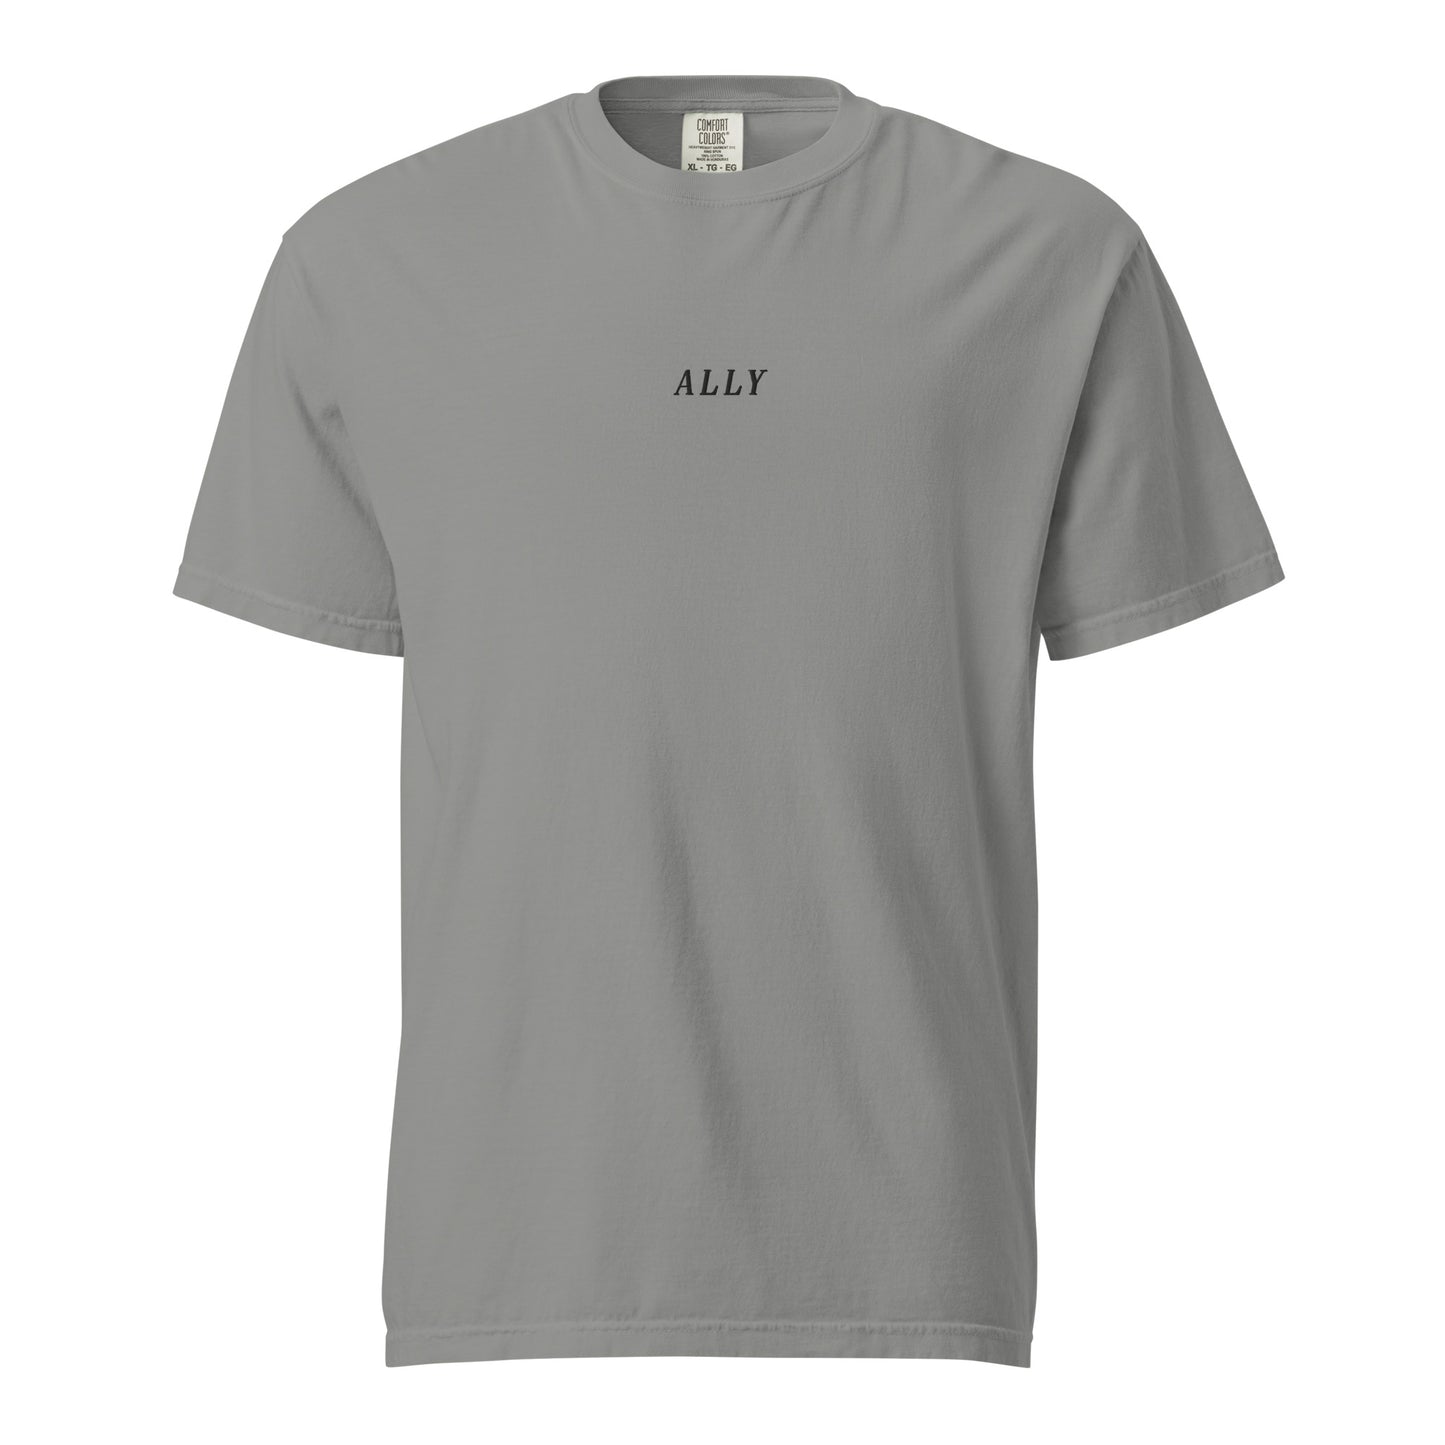 the Ally t-shirt - svart brodering